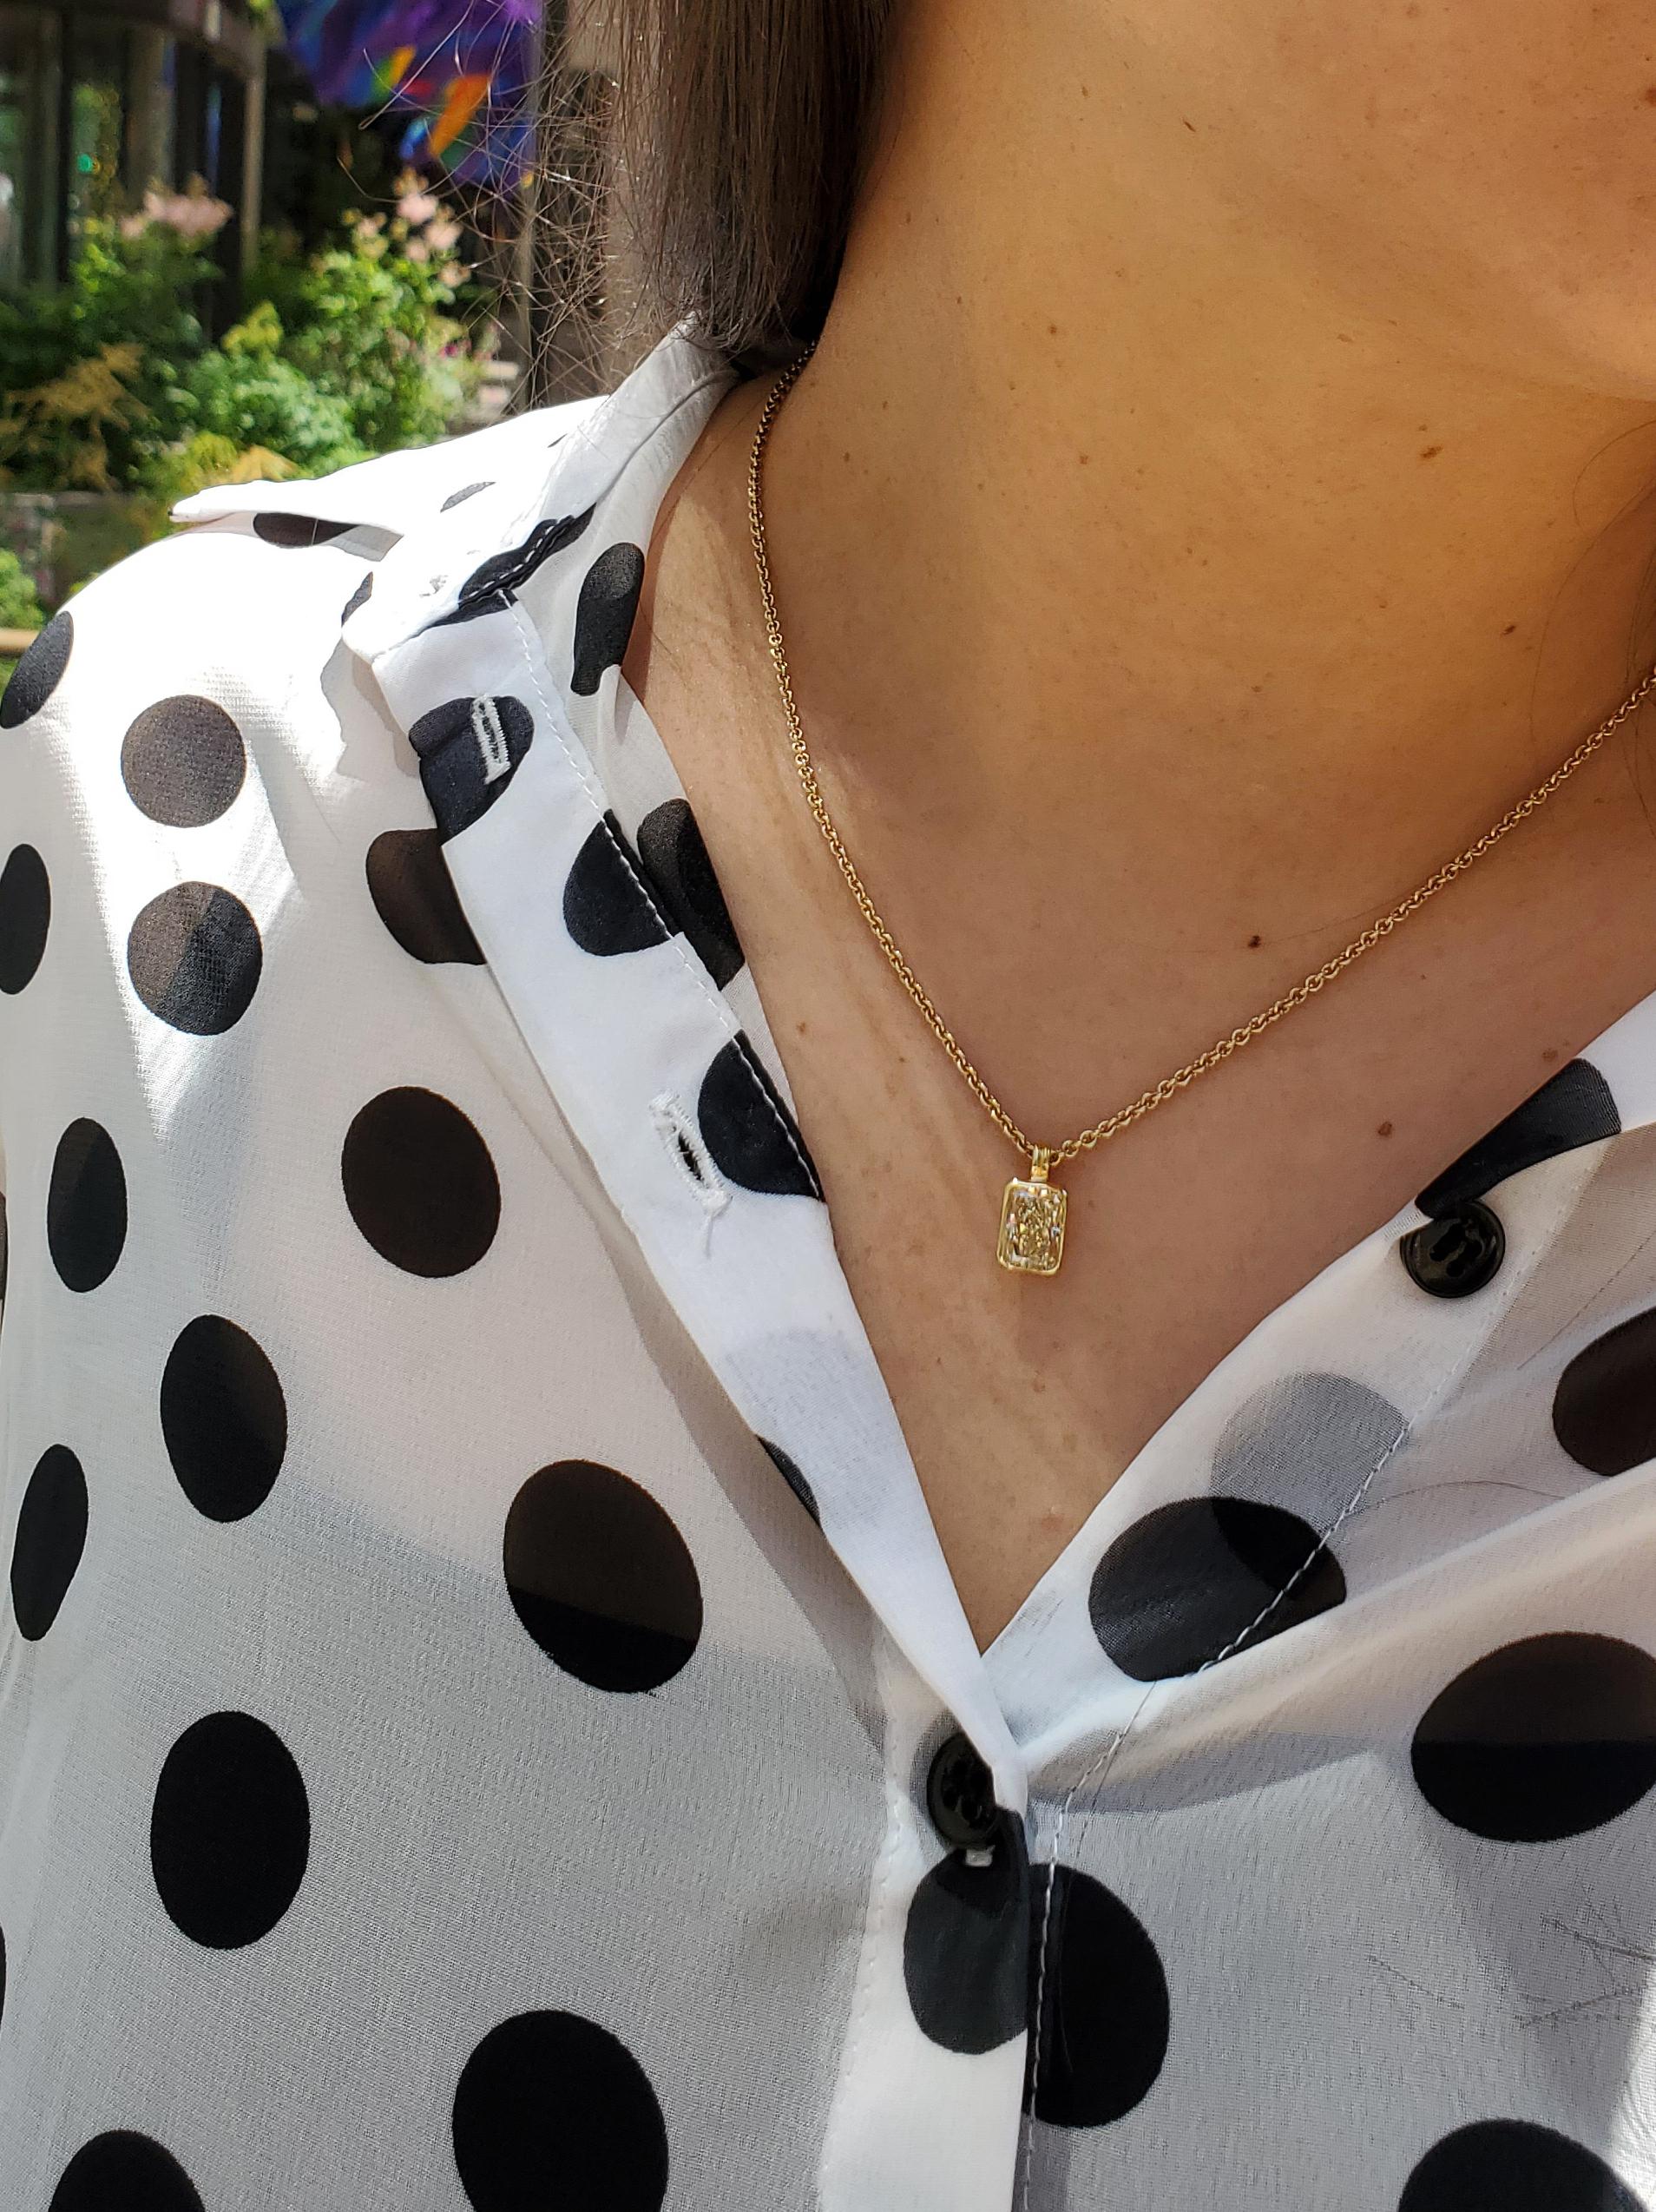 Women's Natural 1.92ct Fancy Yellow Radiant Cut Diamond Solitaire 18K G Pendant Necklace For Sale